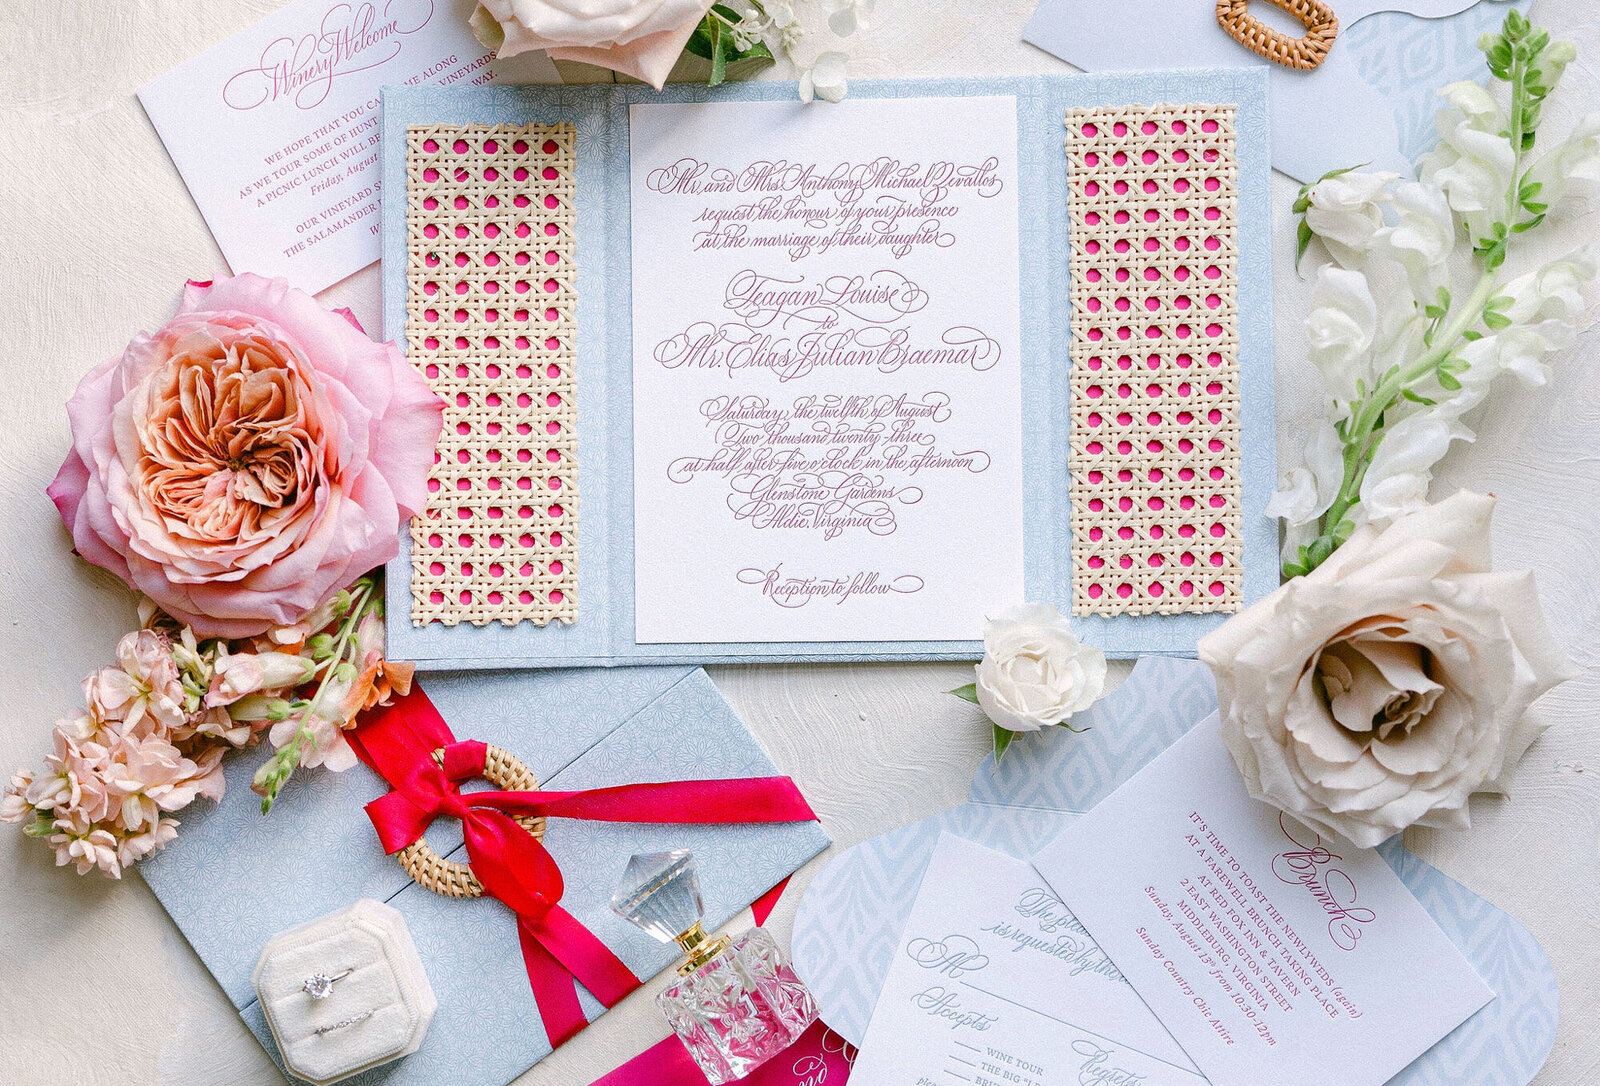 Luxurious wedding invitation photo with wedding details surrounding it